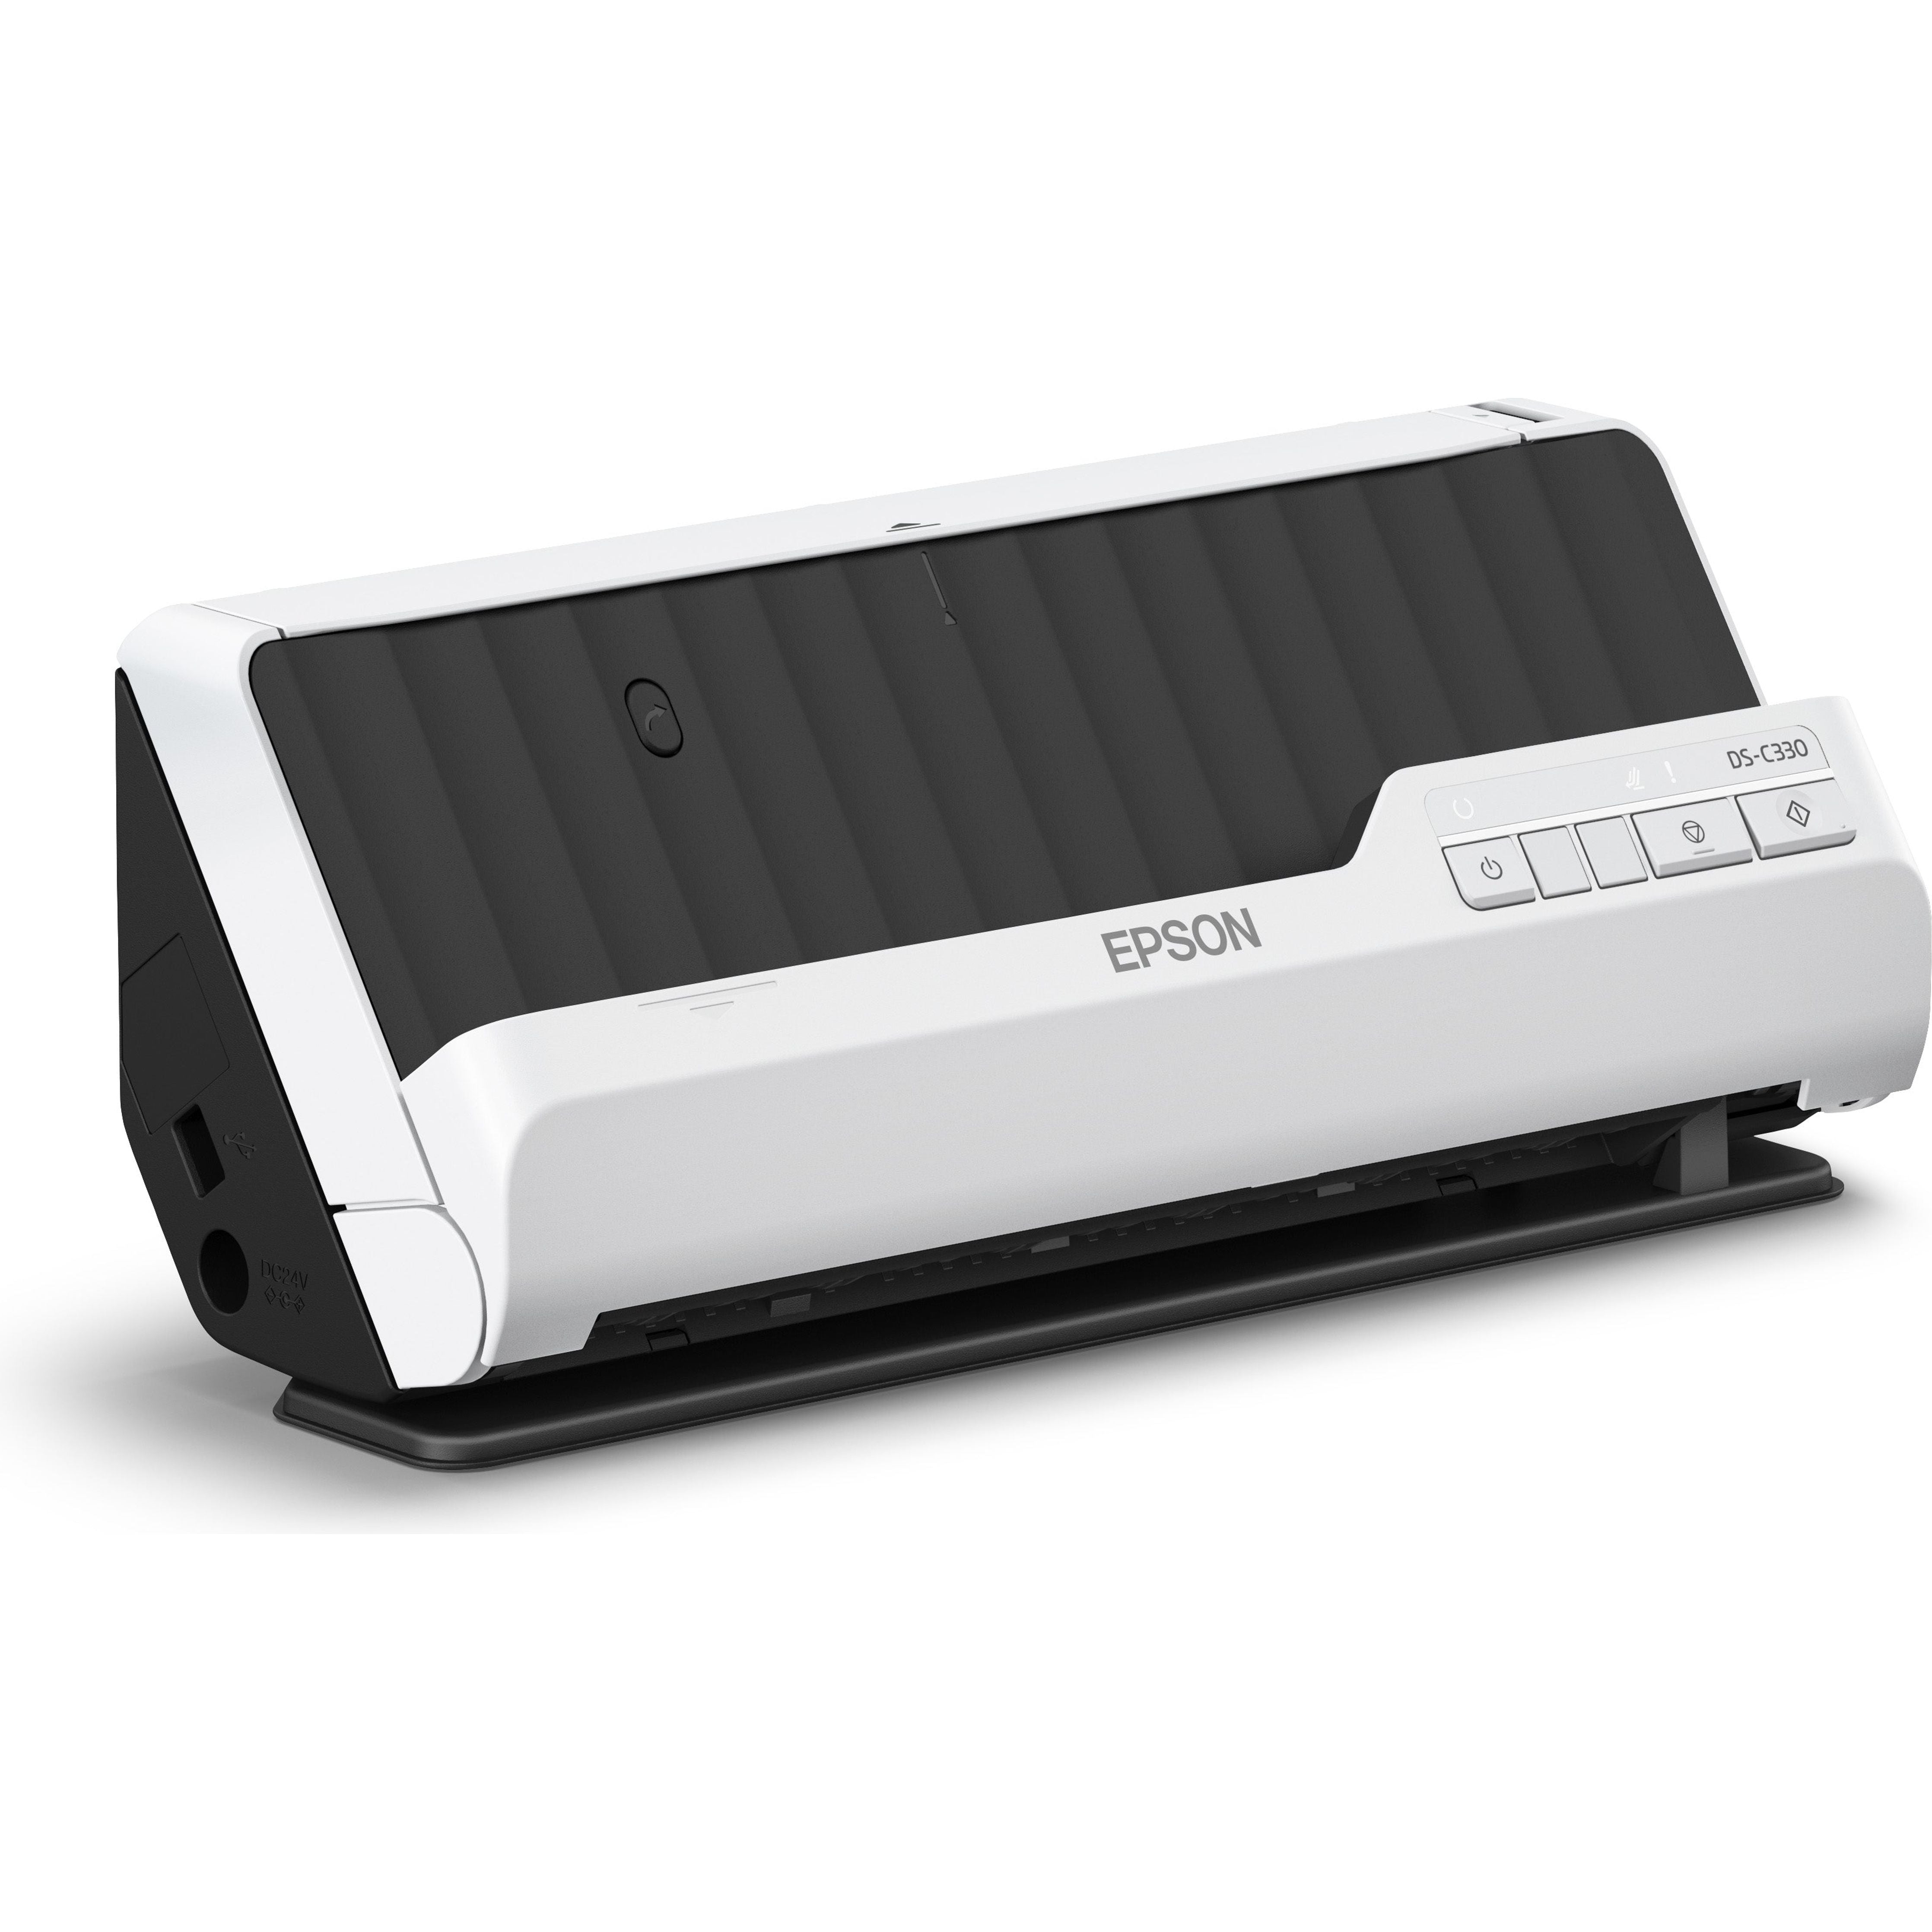 Epson Workforce DS-C330 compact scanner